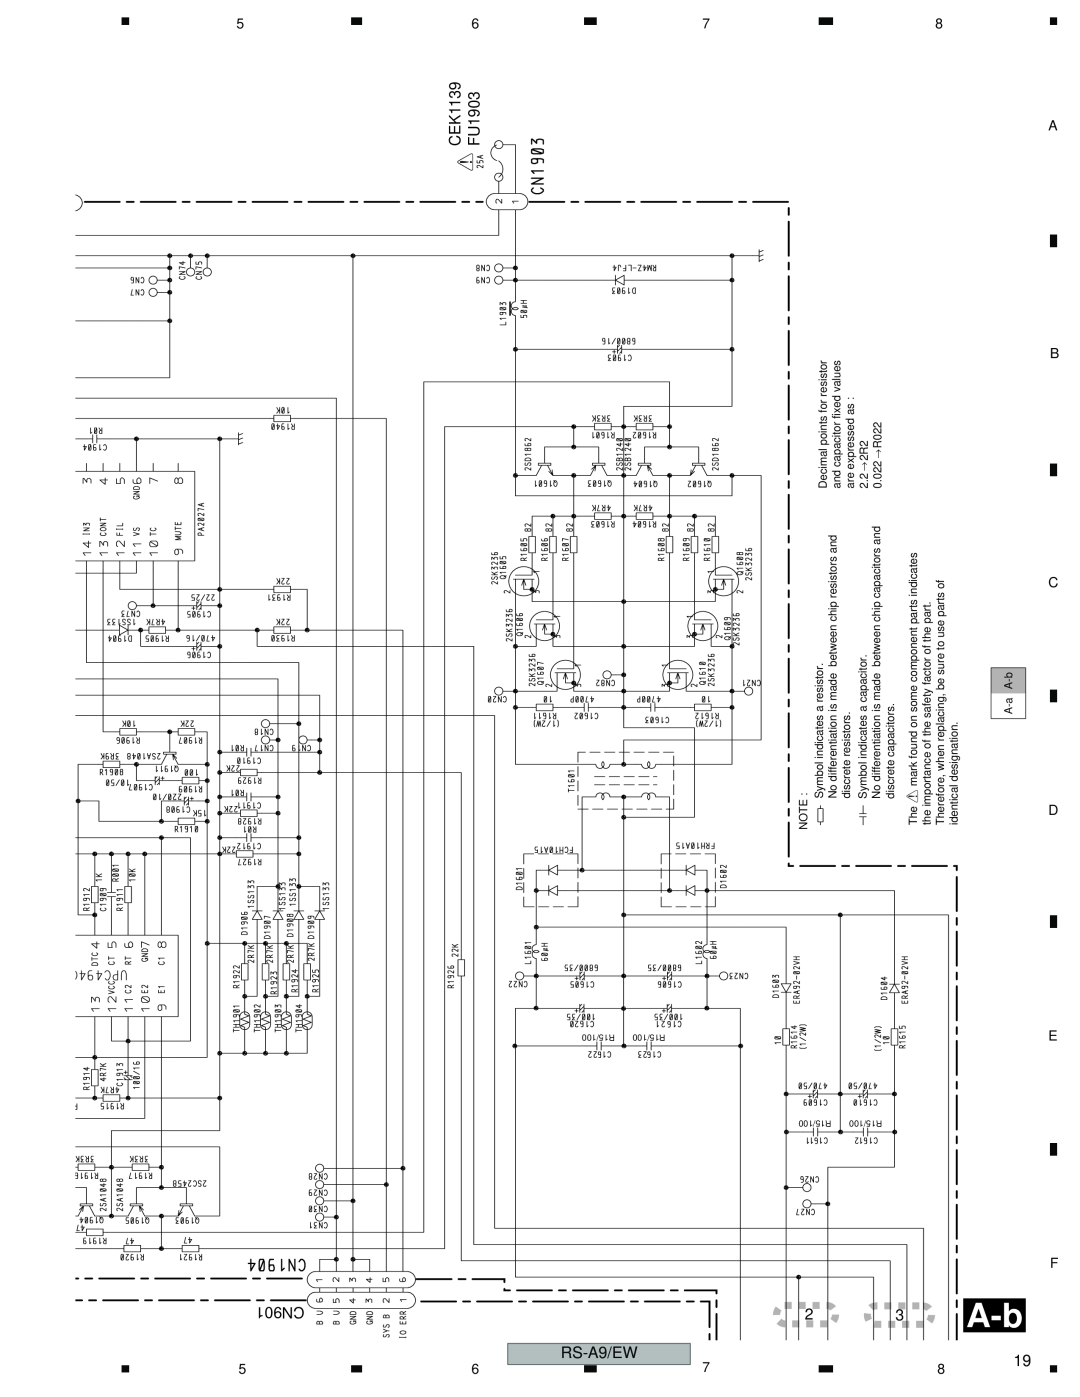 Pioneer RS-A9/EW manual CEK1139 > FU1903, 5 CN901 6, 5 6 7 